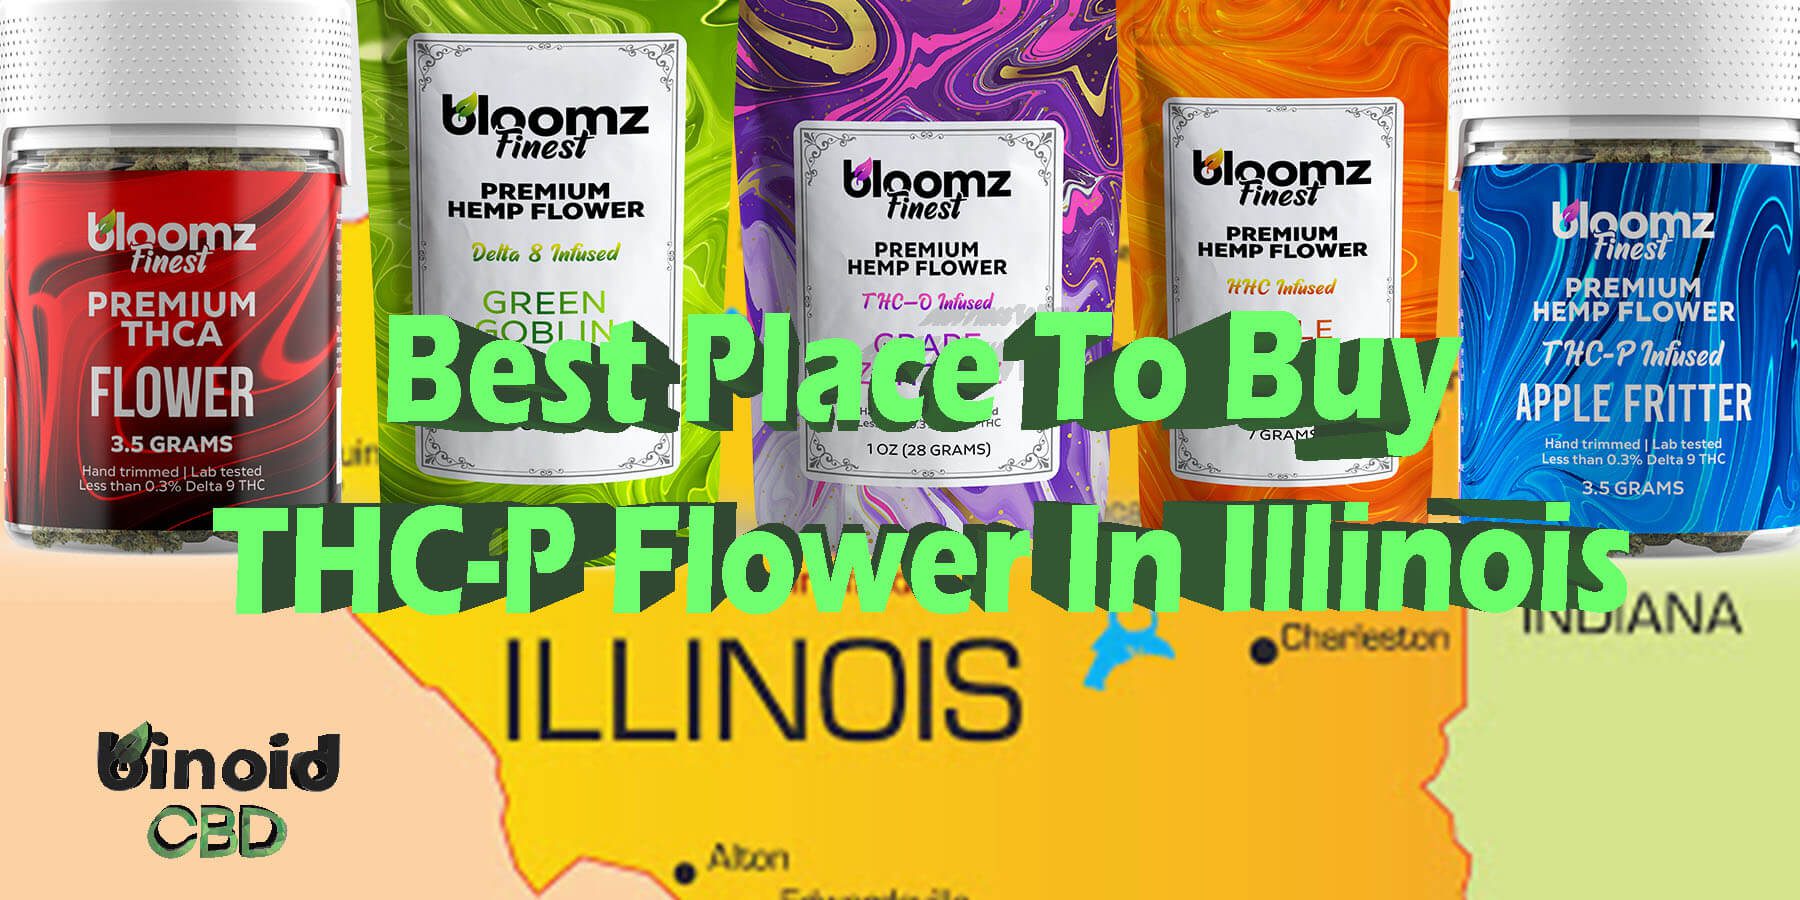 Buy THCP Hemp Flower Illinois Pre Rolls Get Online Near Me For Sale Best Brand Strongest Real Legal Store Shop Reddit